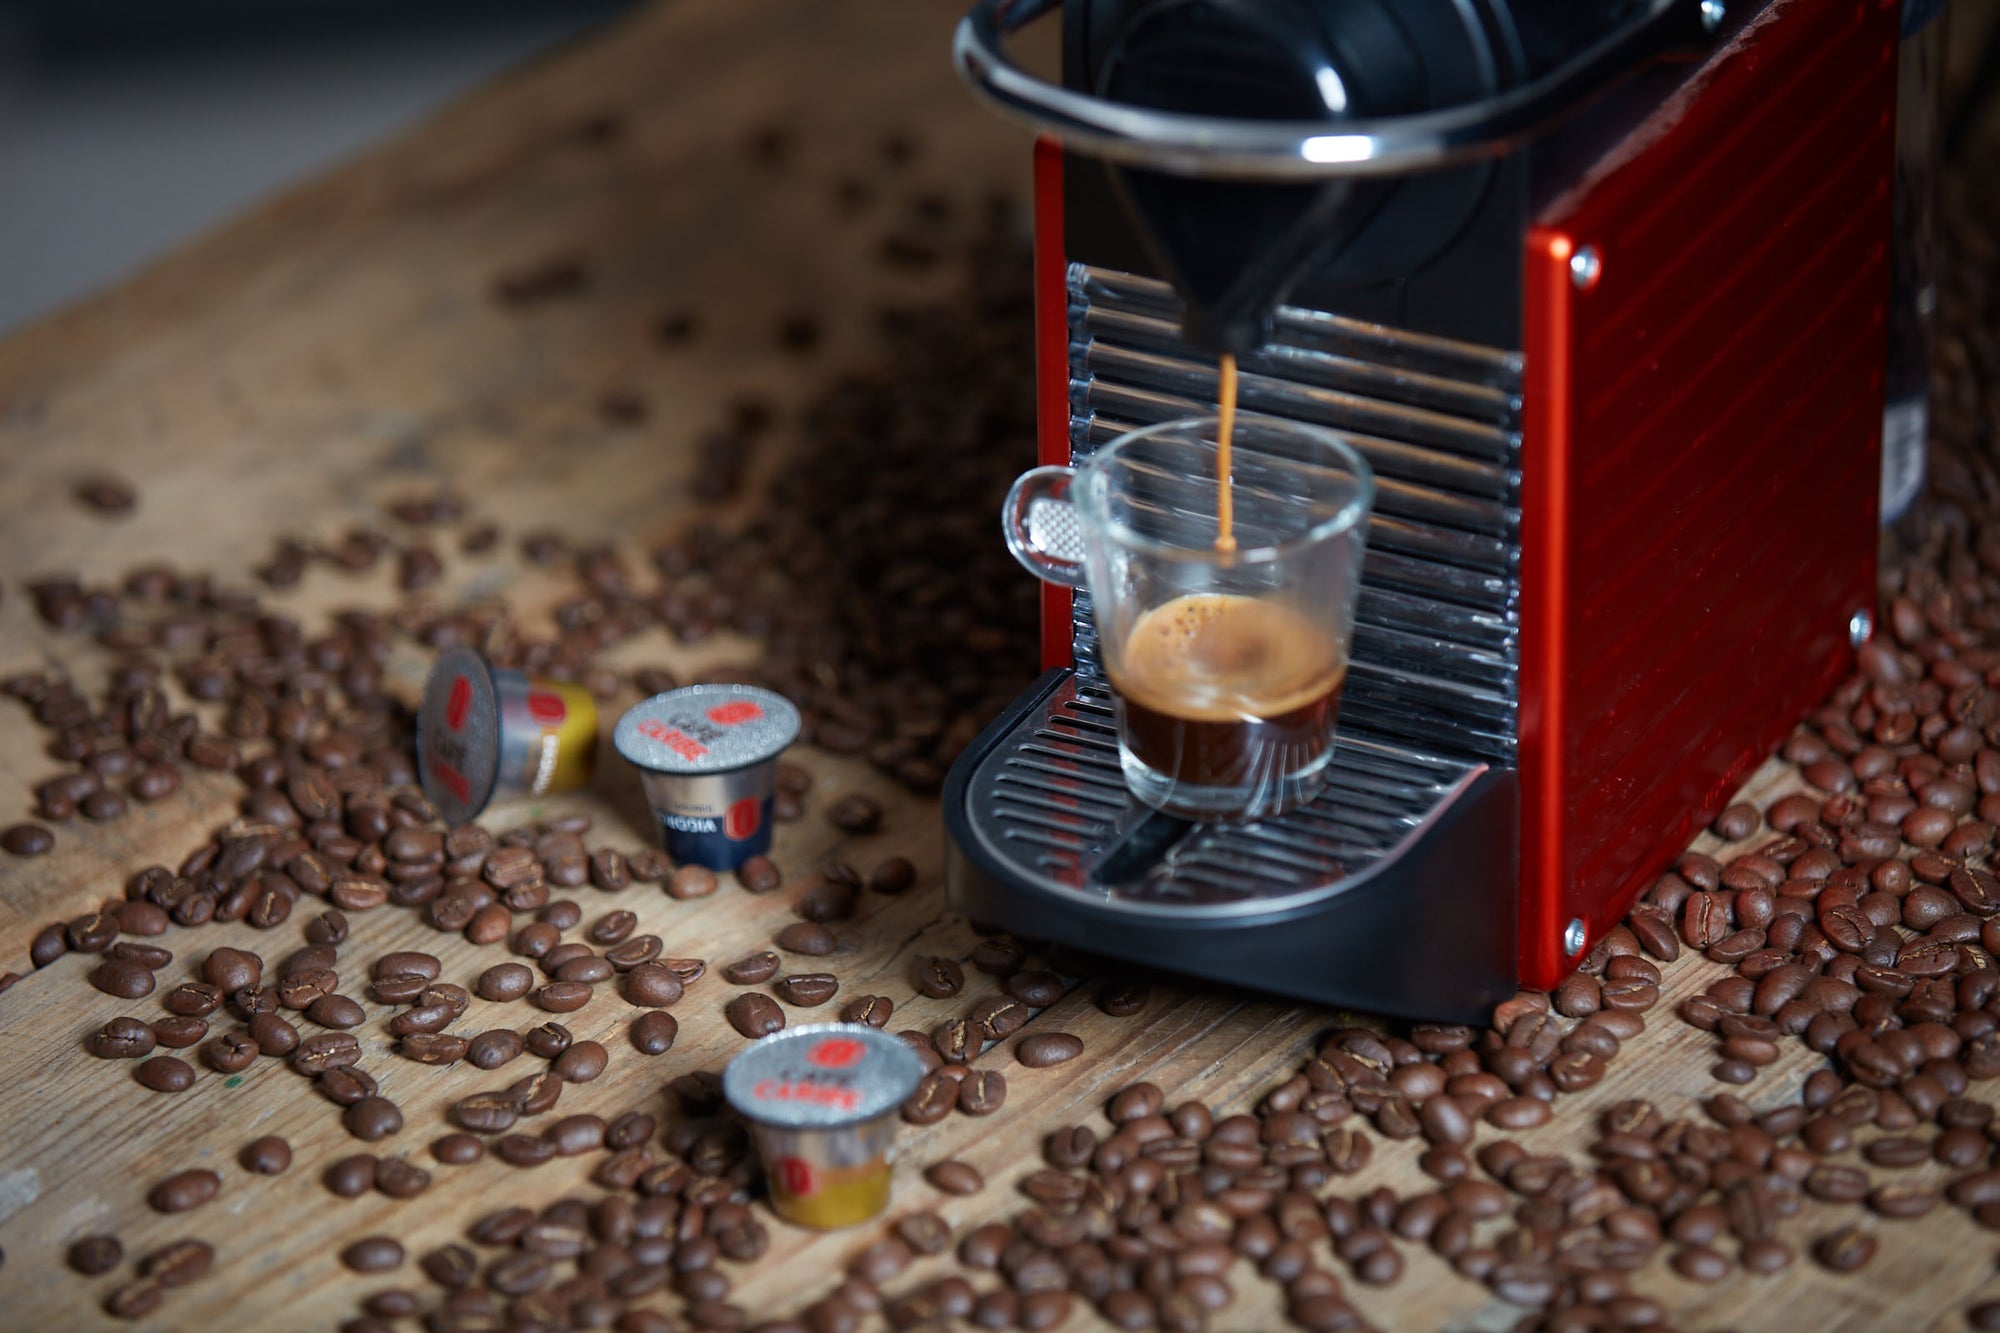 Cafetera Nespresso negra/roja/blanca, gran oferta - AliExpress